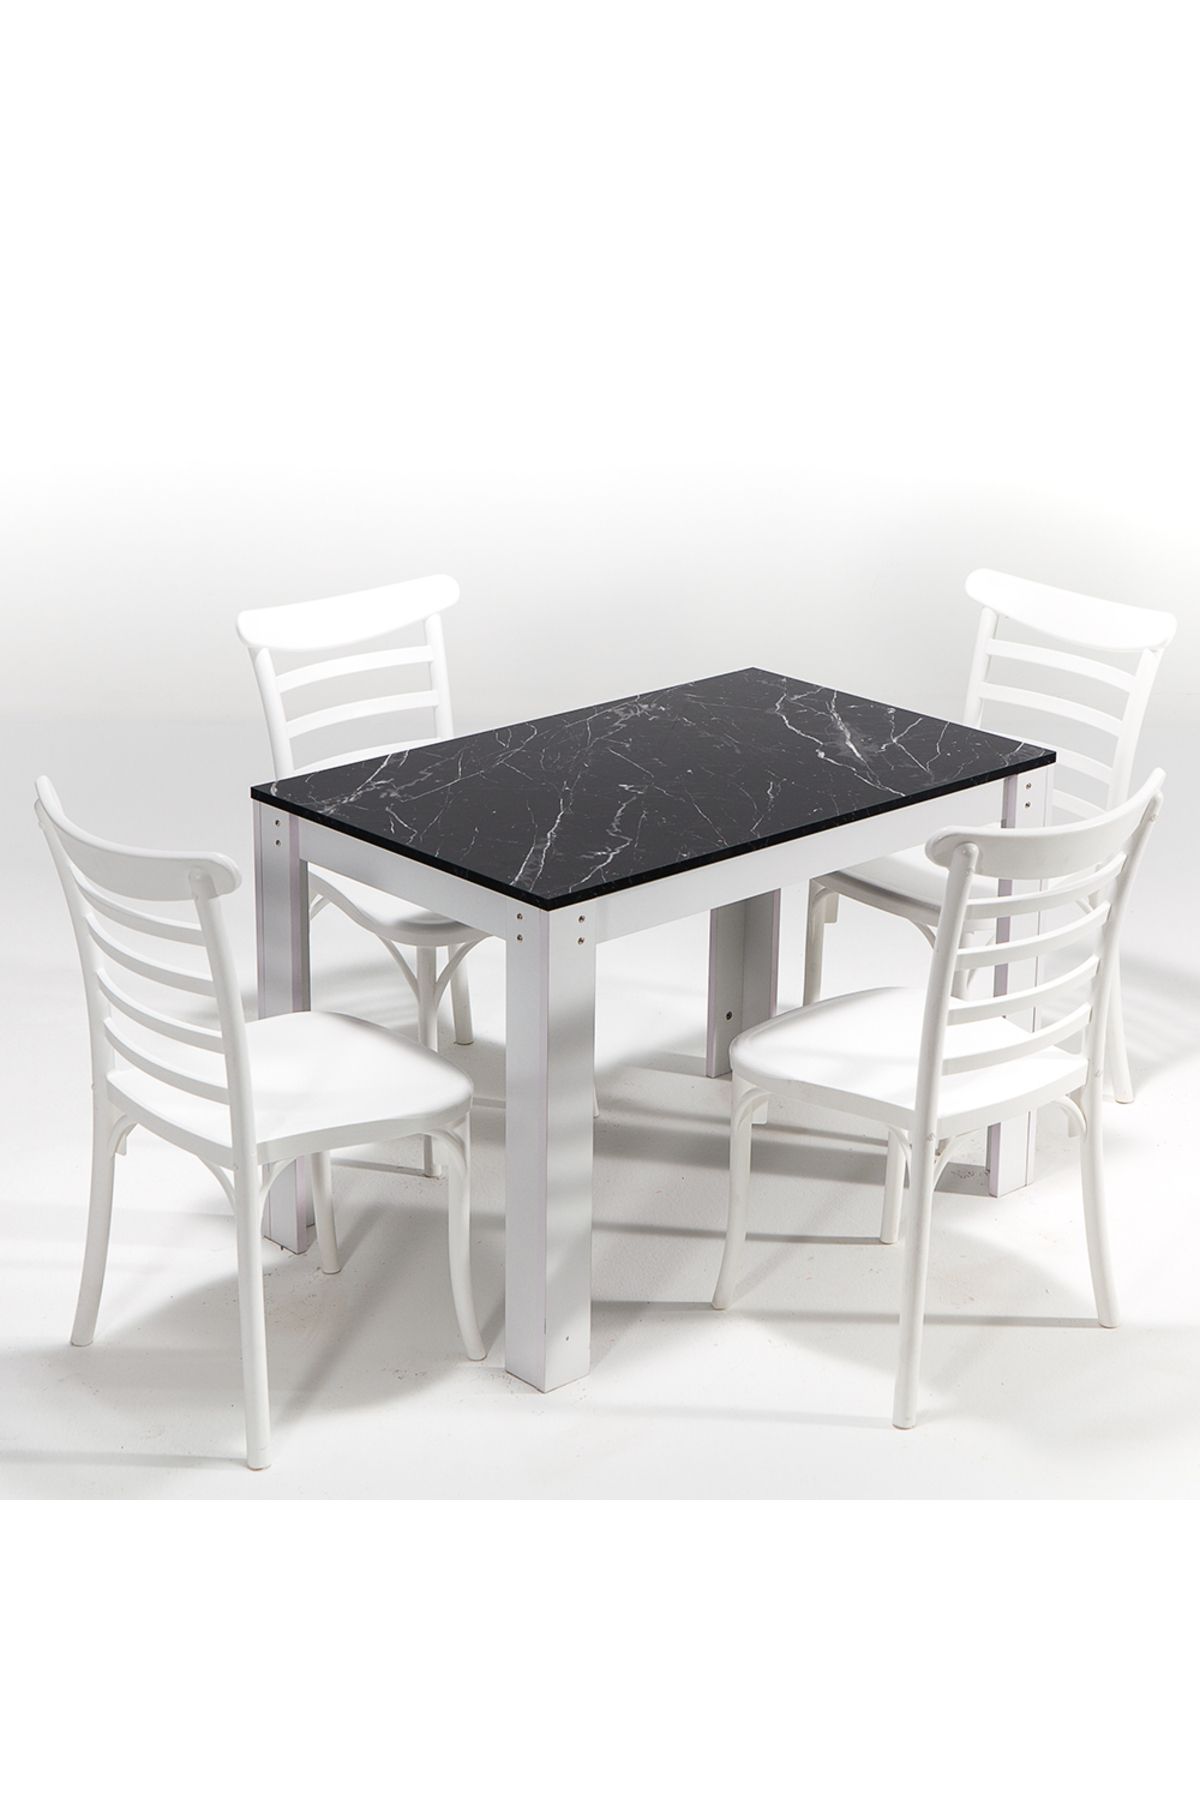 MOBETTO Mirage / Efes Mutfak Masa Takımı 4 Sandalye 1 Masa - Beyaz